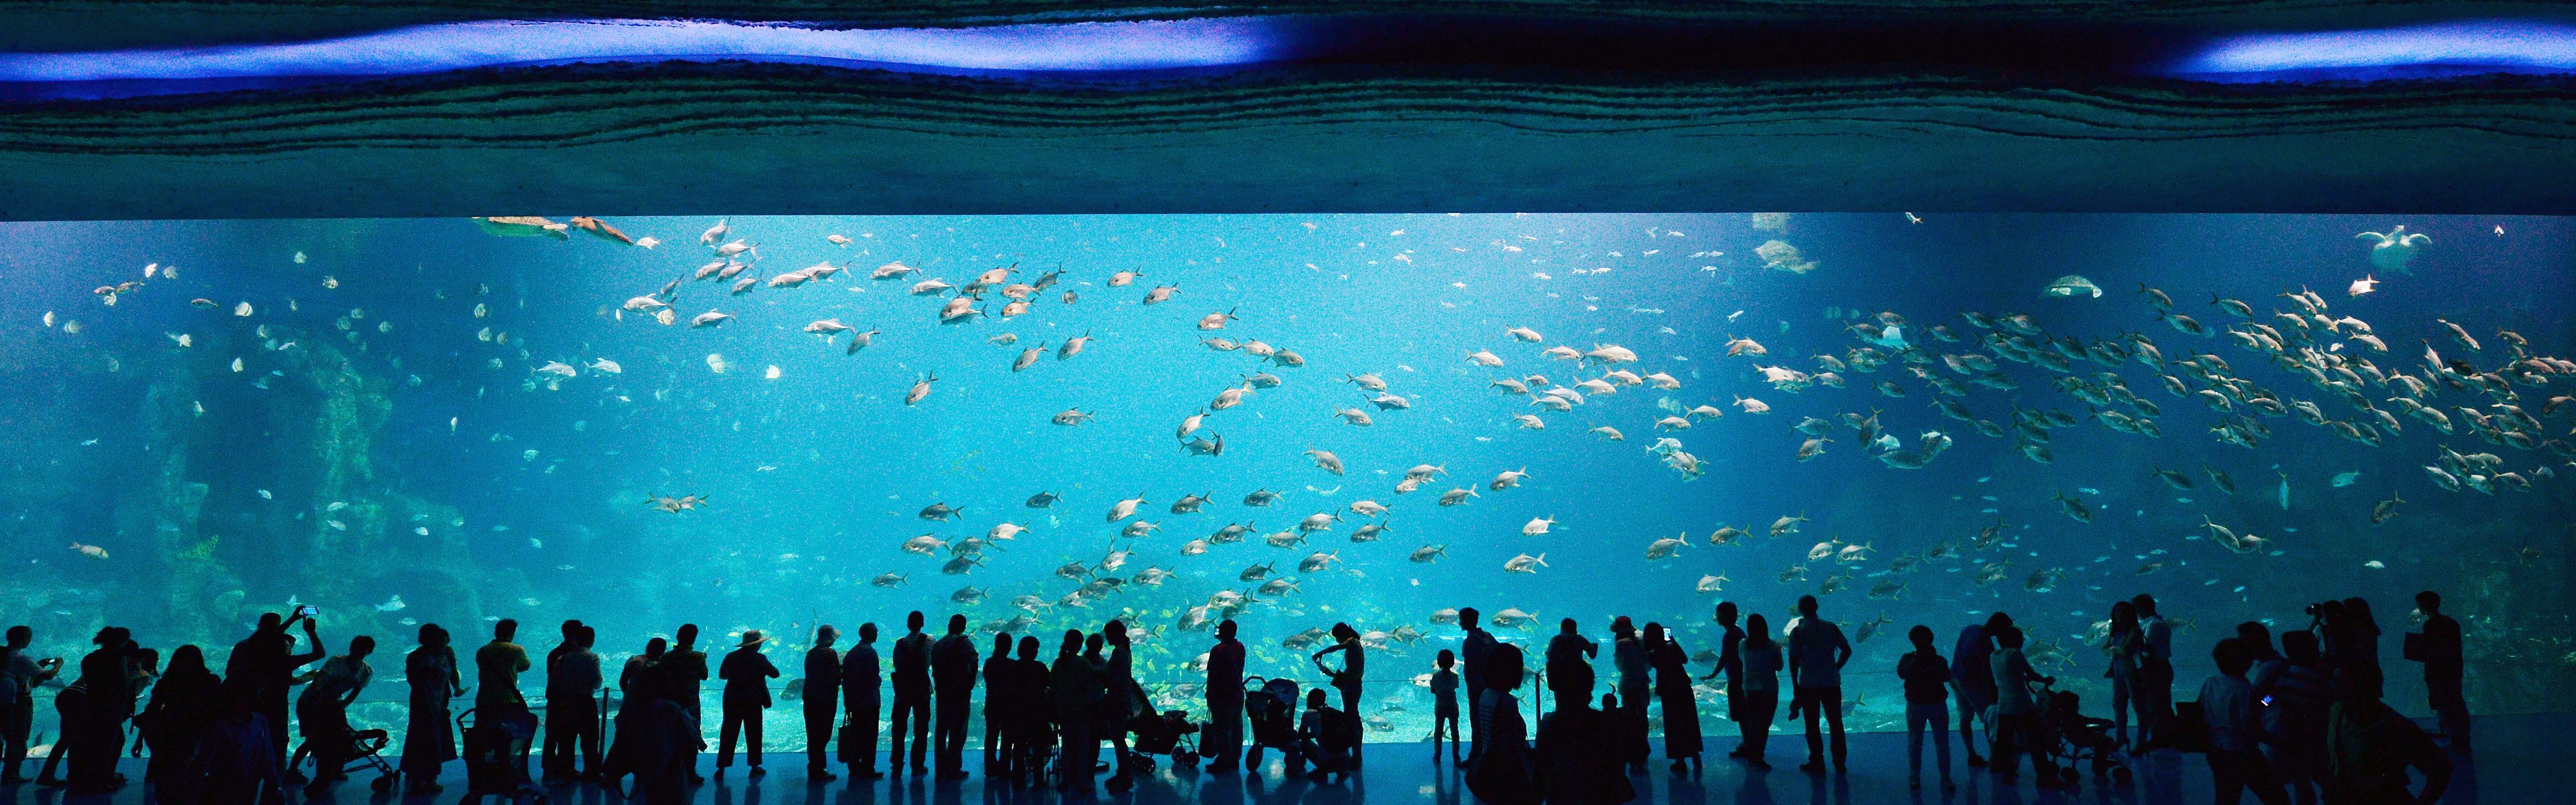 Munching Chemicaliën In zoomen The best aquarium designs | CNN